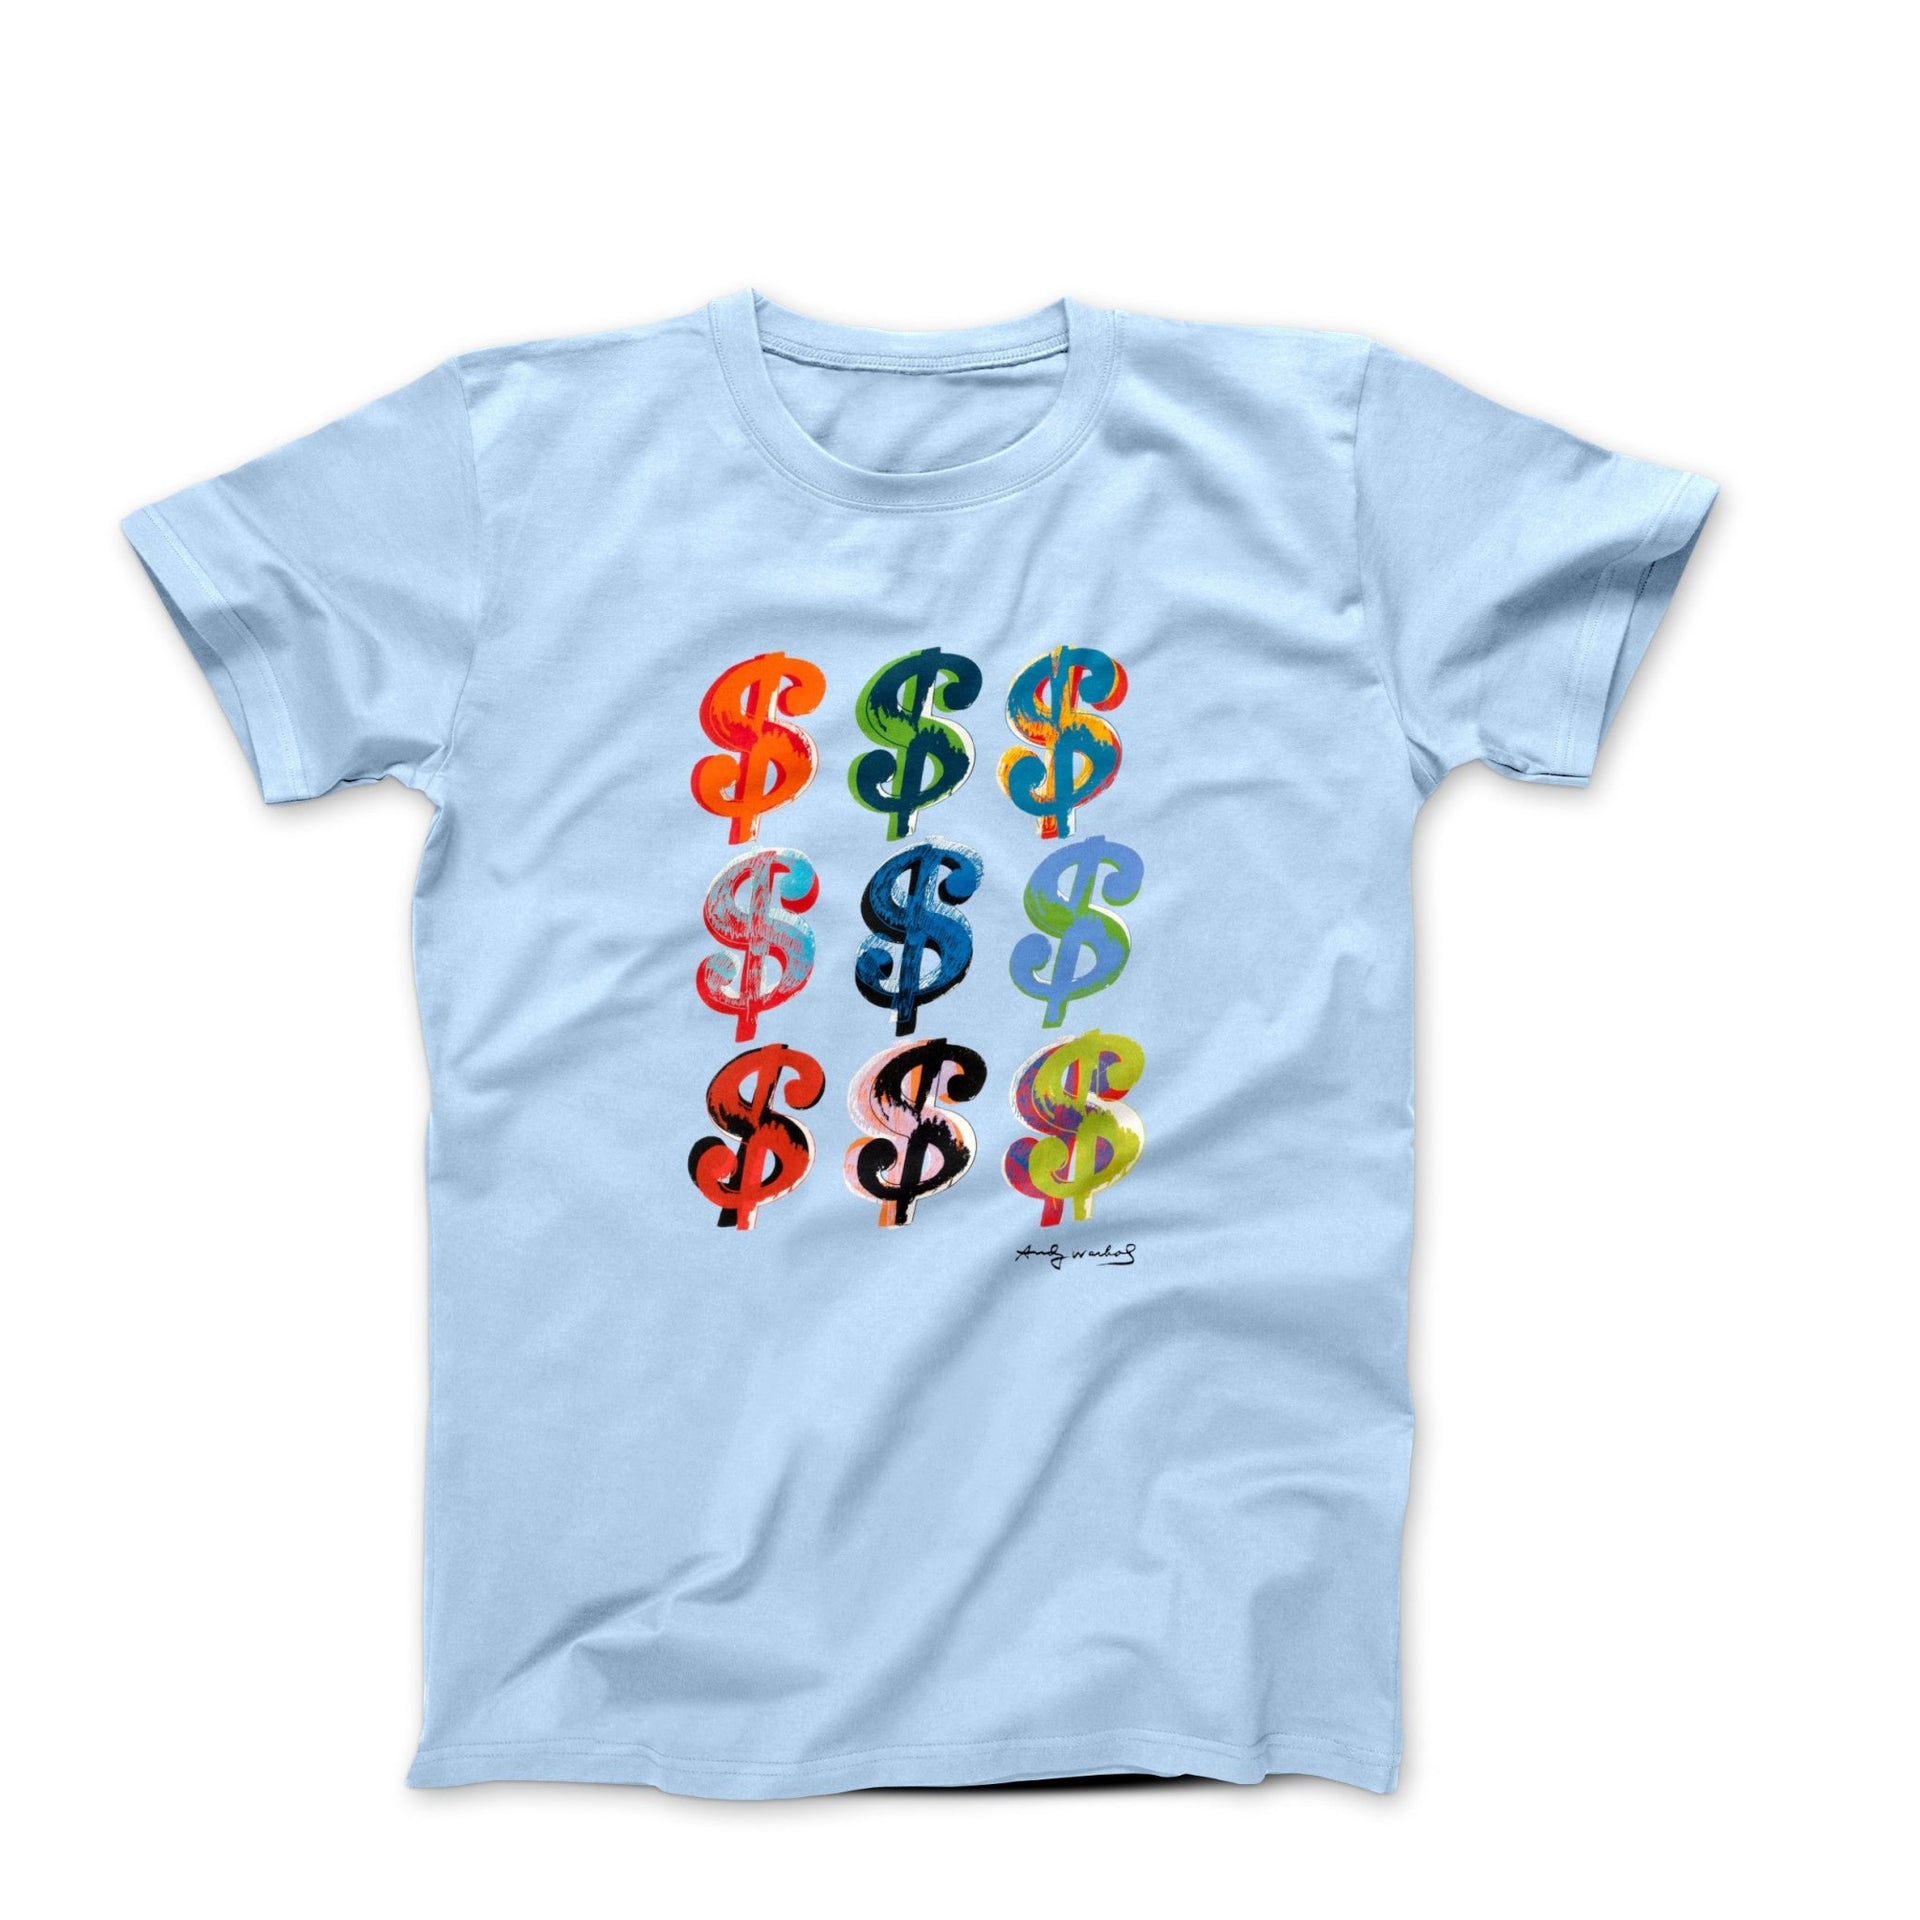 Andy Warhol Dollar Sign (1981) Artwork T-shirt - Clothing - Harvey Ltd